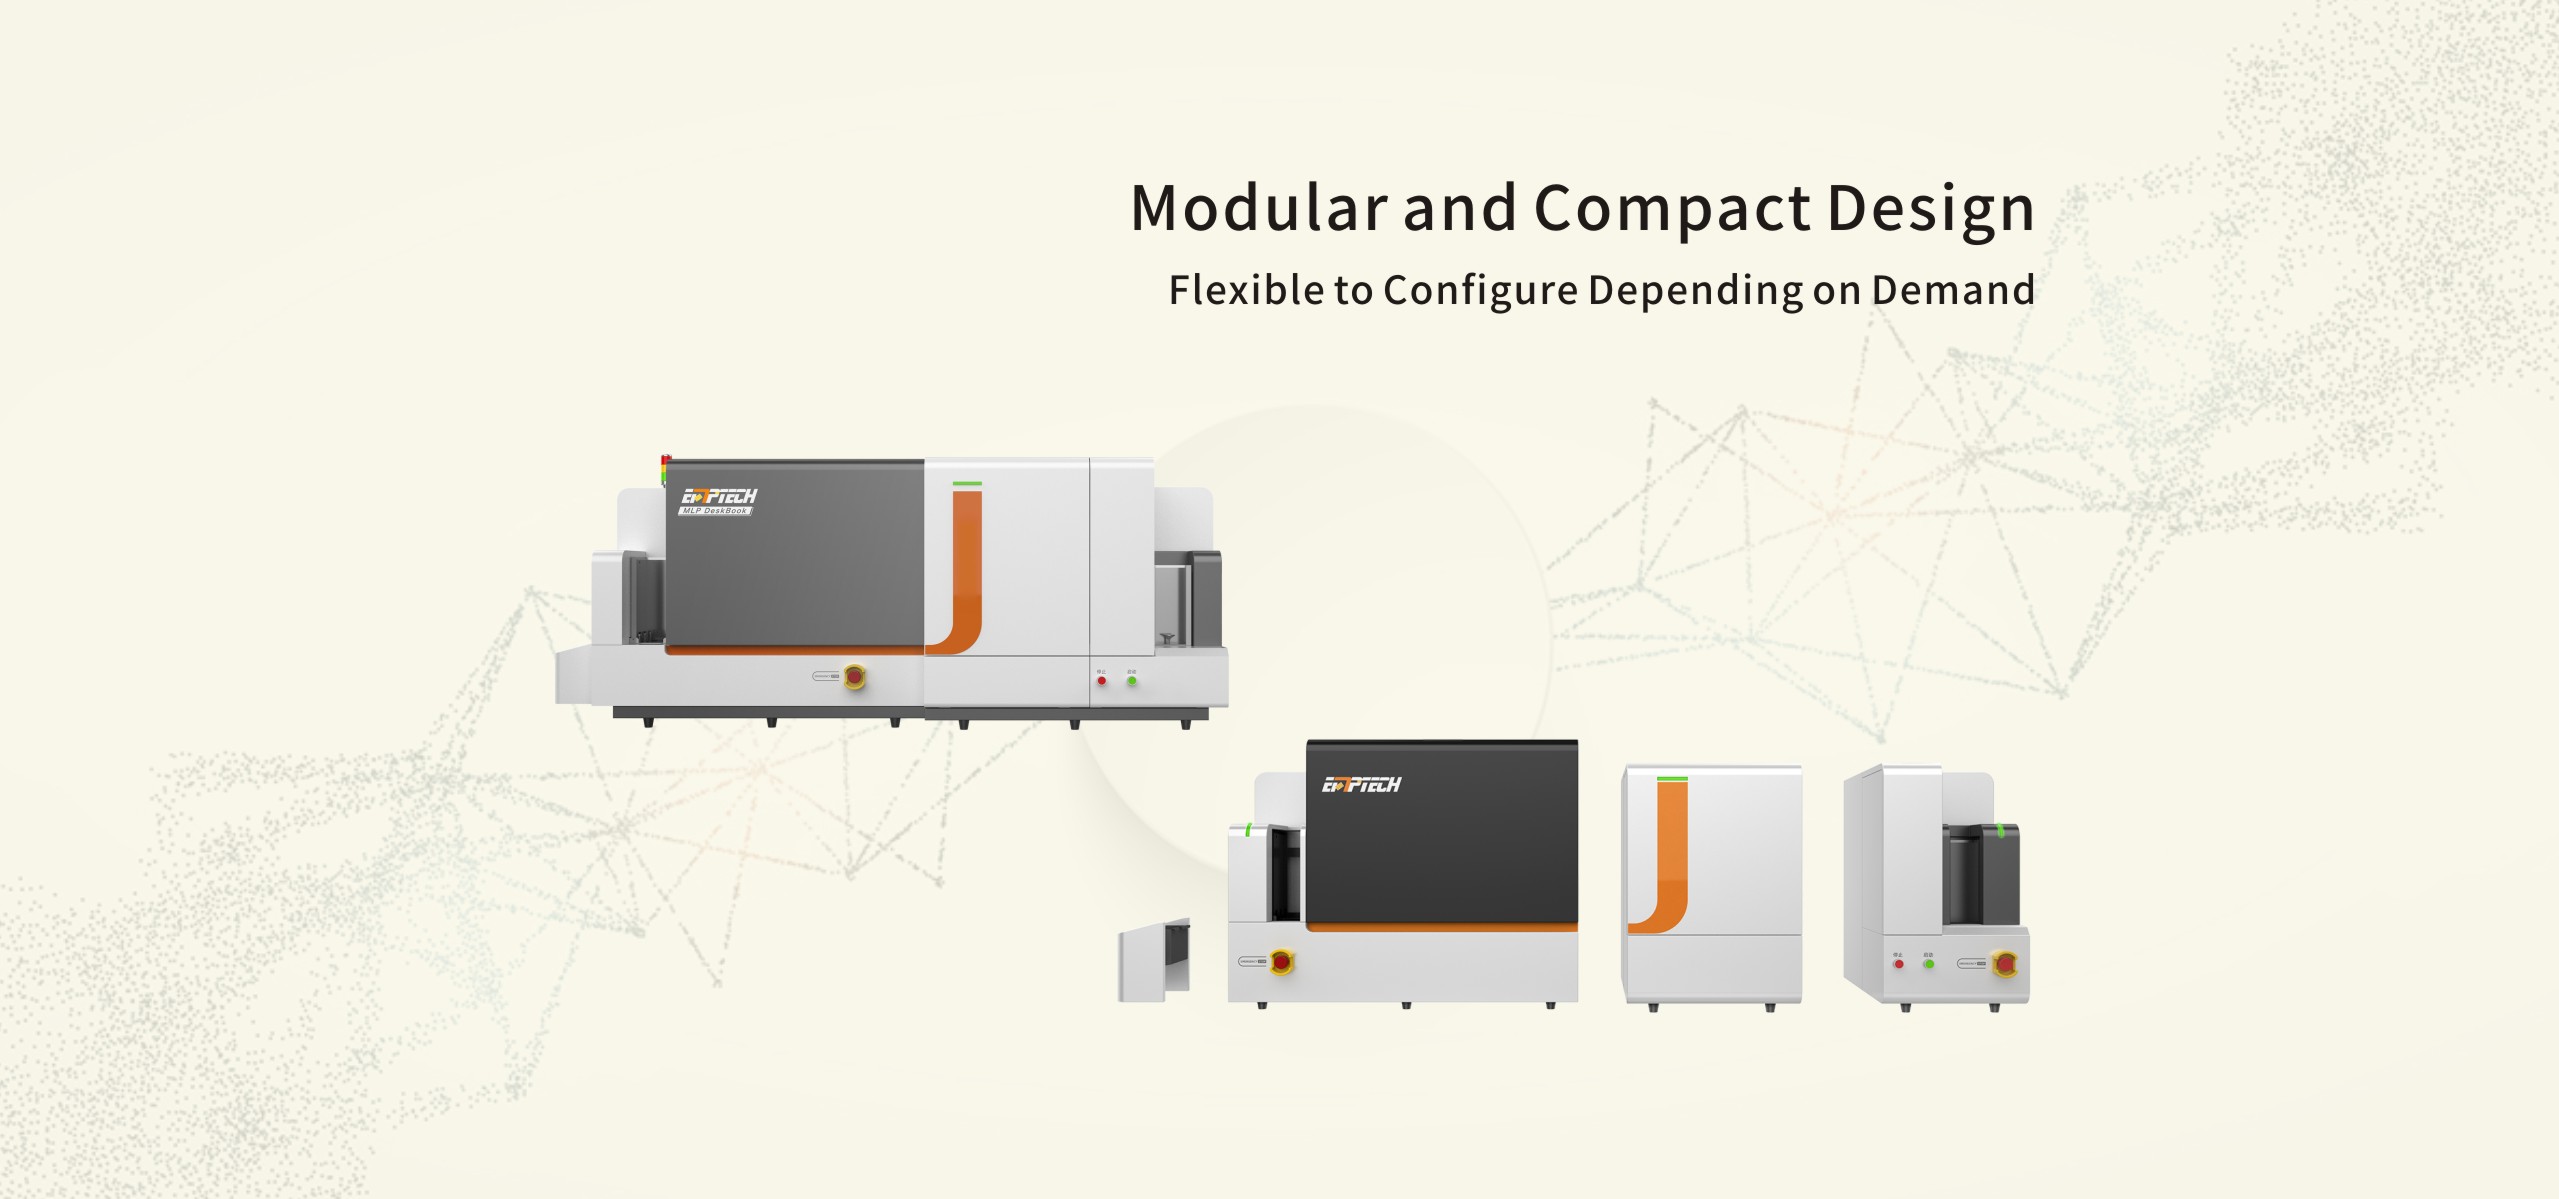 Modular and Compact Design